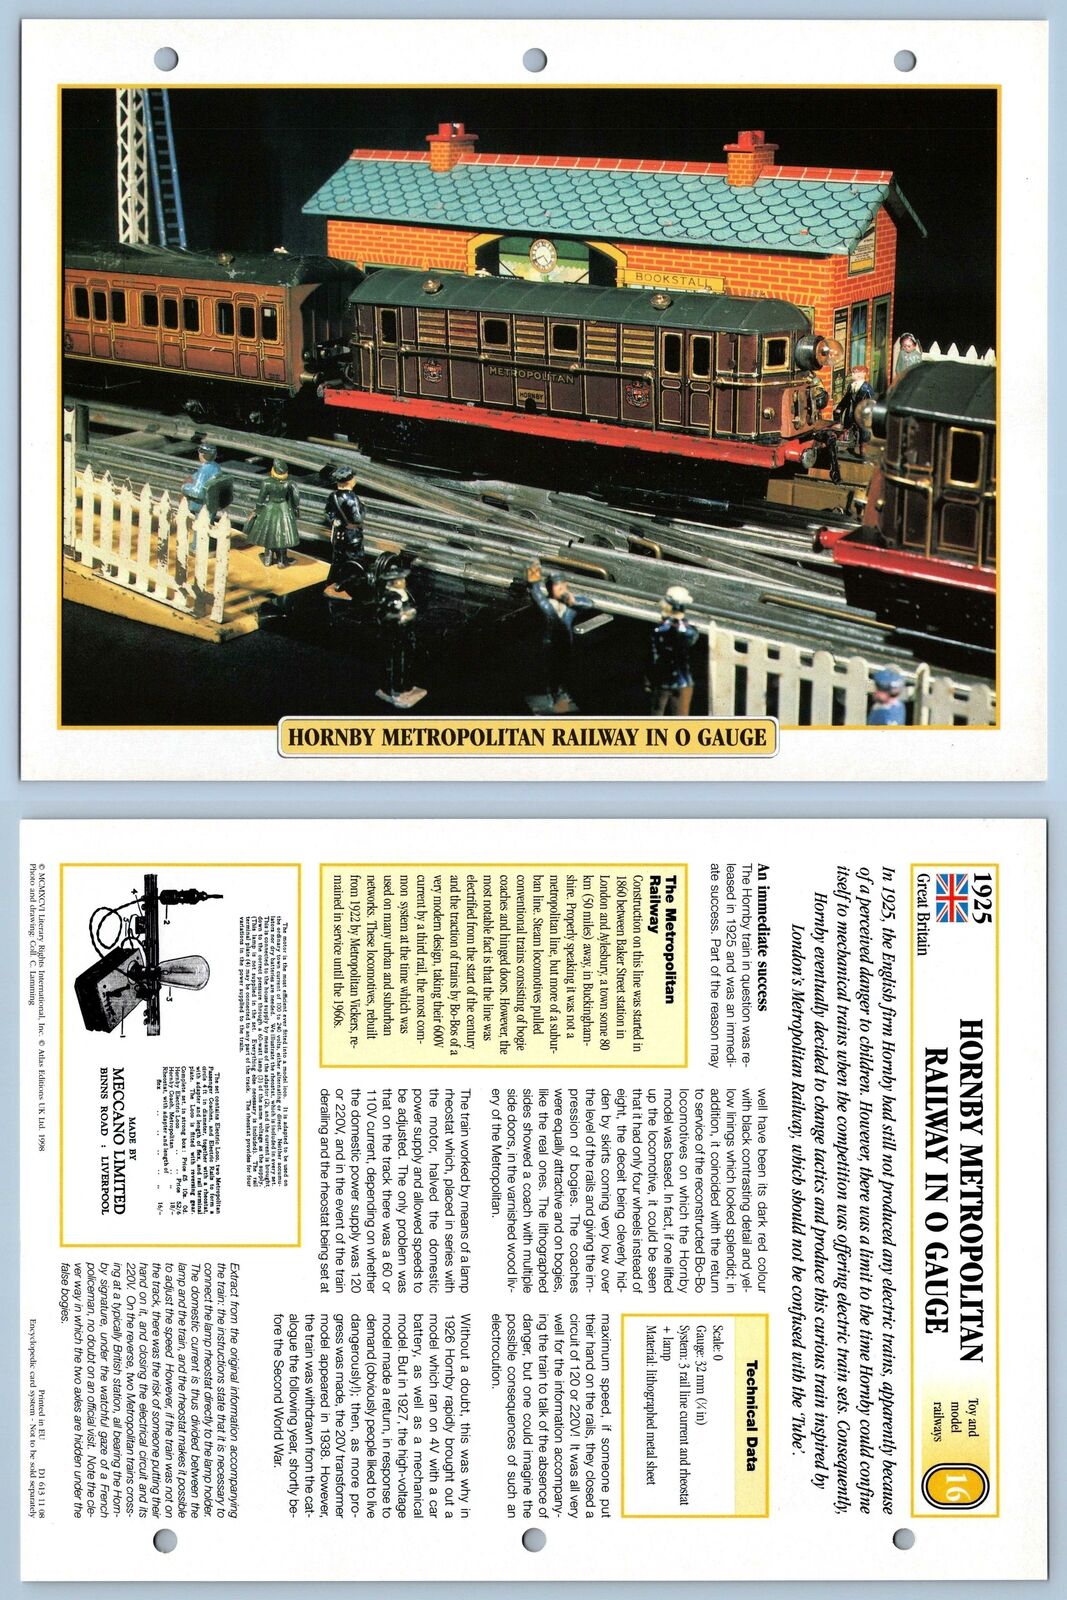 Hornby Met. Railway In O Gauge - Toy Railways - Legendary Trains Maxi Card